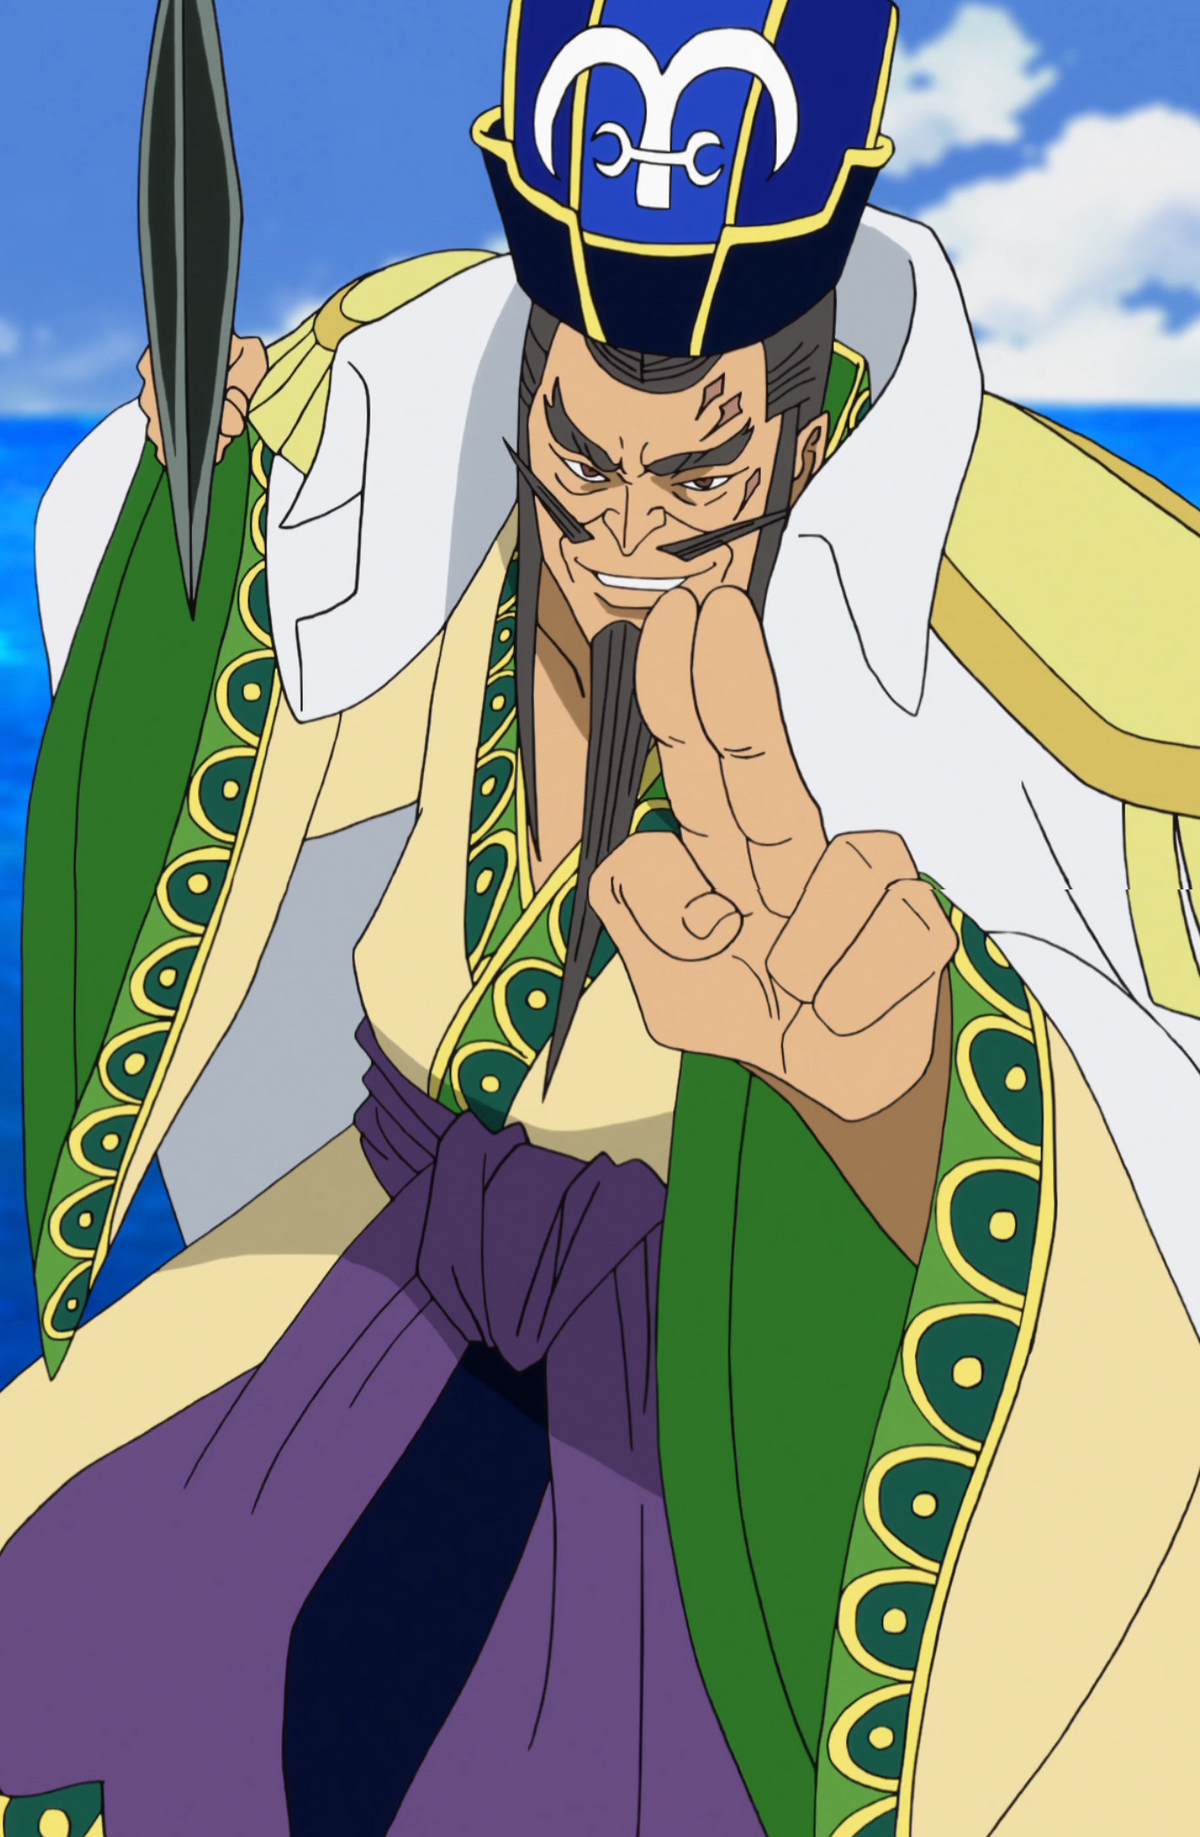 Hito Hito no Mi, Model: Sun God Nika, One Piece: Ship of fools Wiki